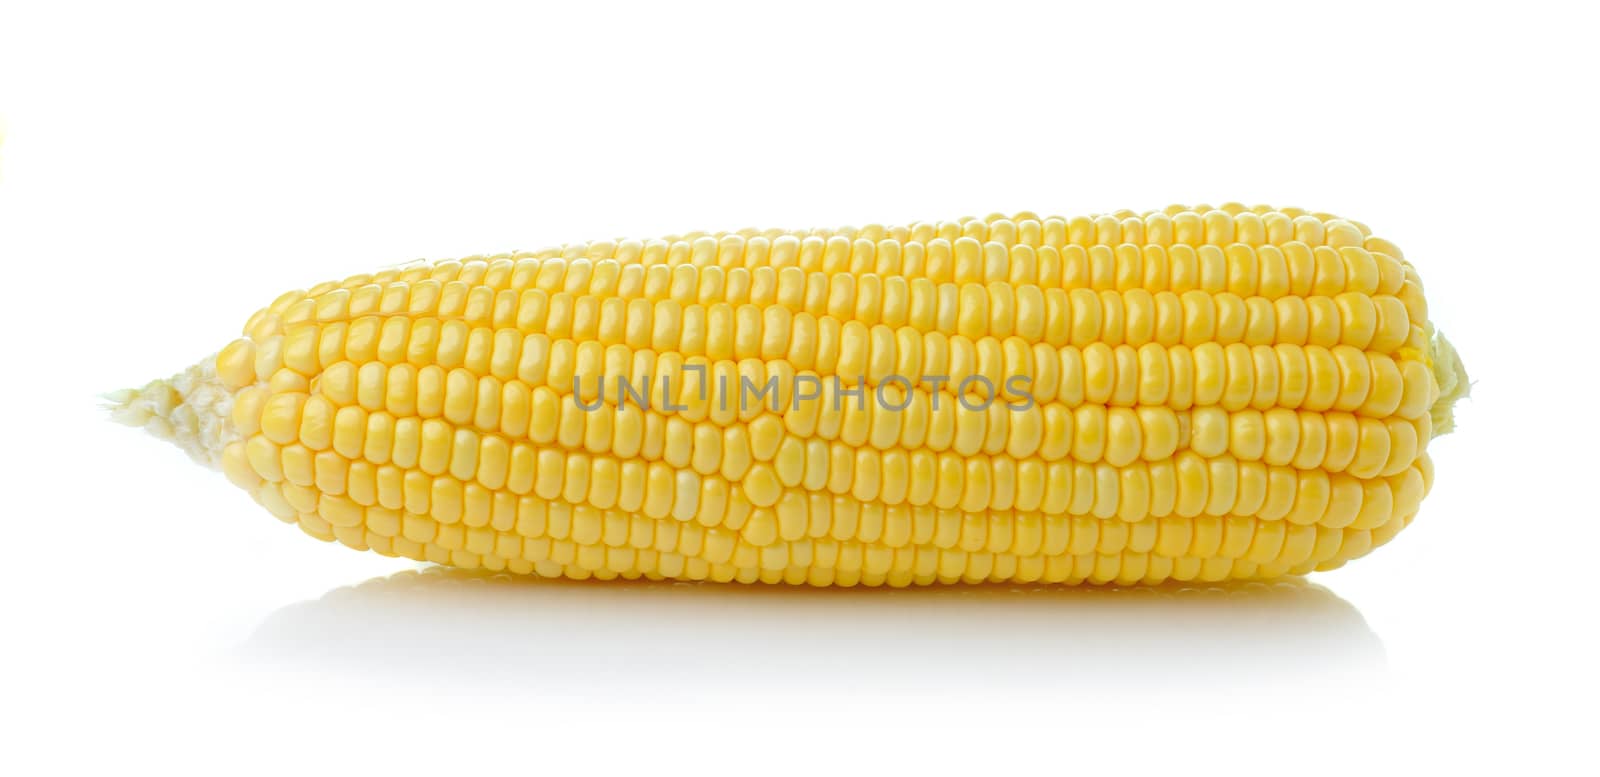 corn isolated on white background